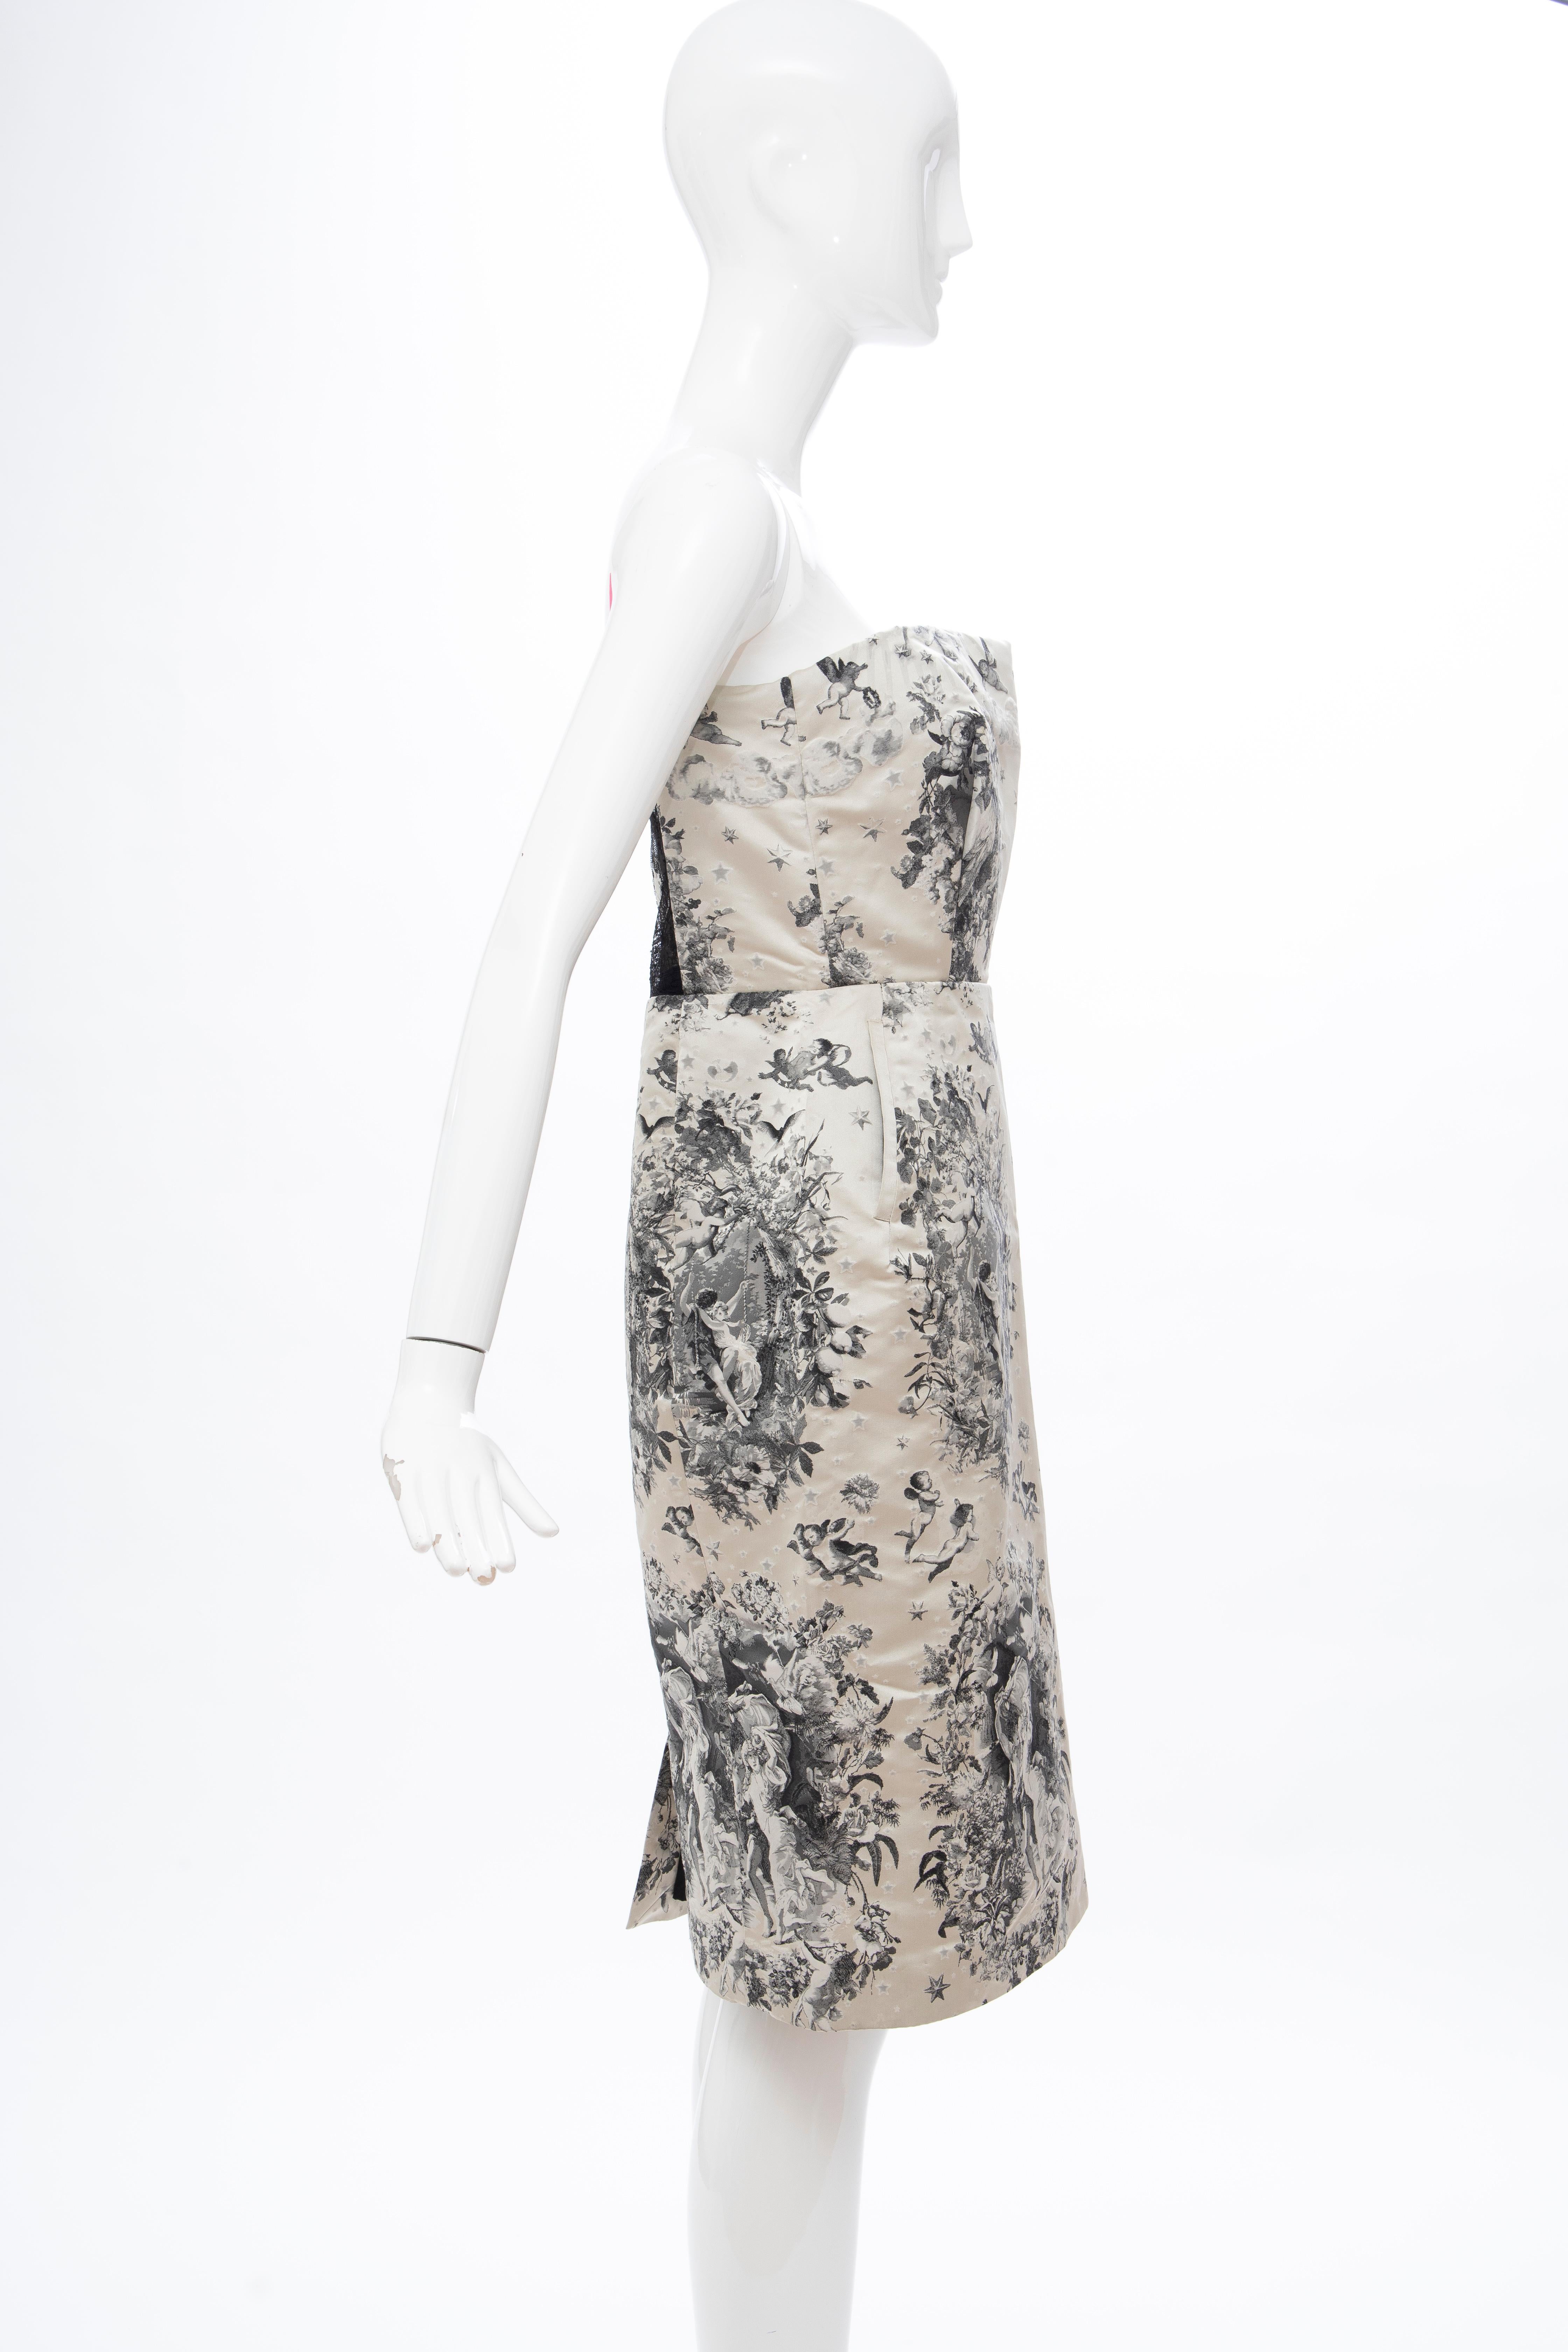 Gray Jean Paul Gaultier Strapless Sheath Printed Silk & Lace Evening Dress, Fall 2007